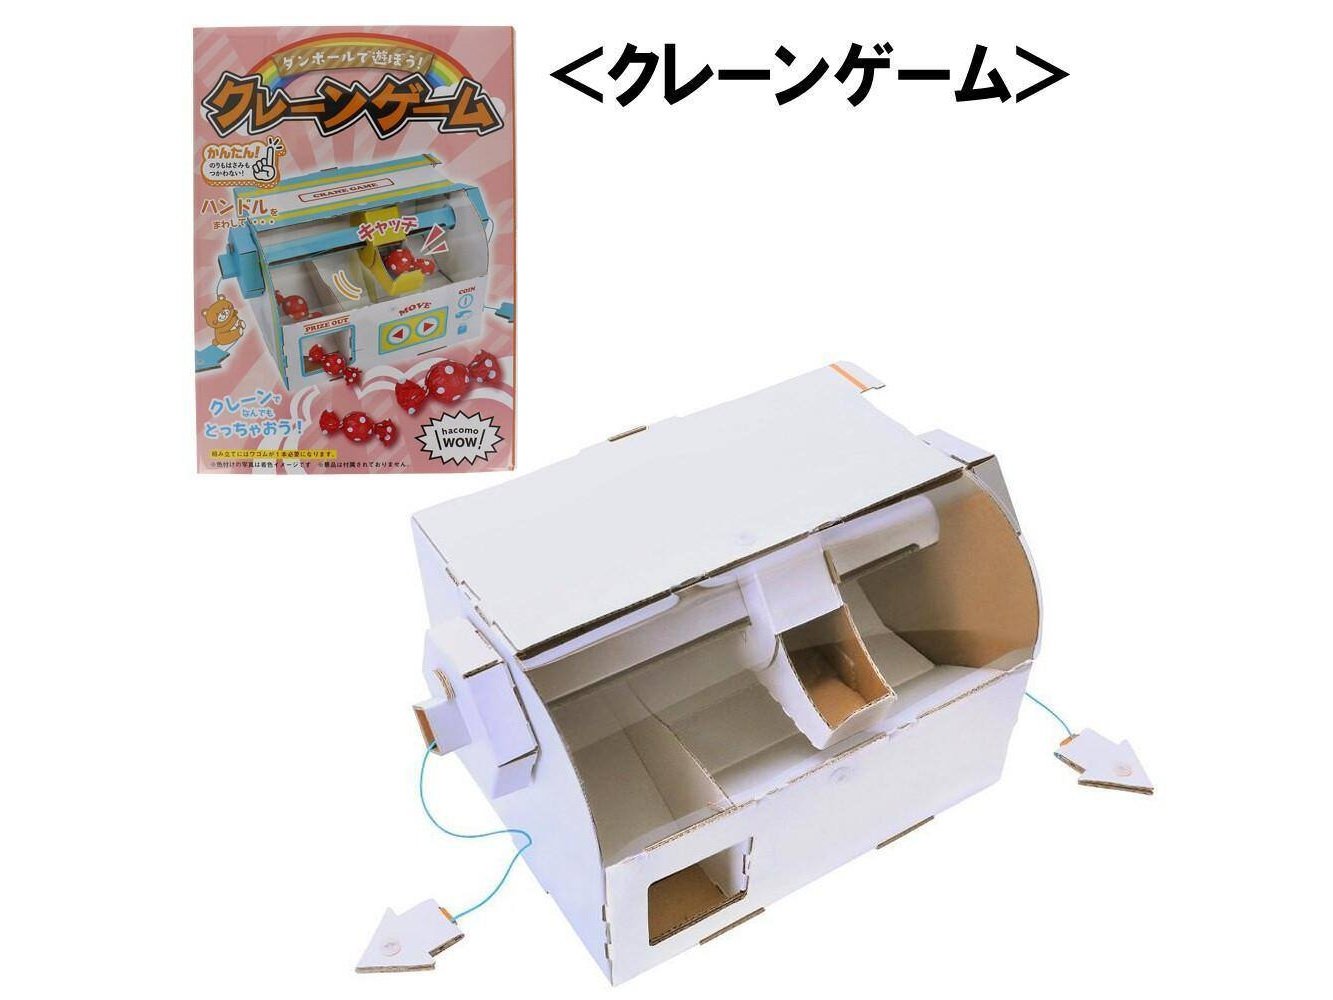 Hacomo Crane Craft Kit